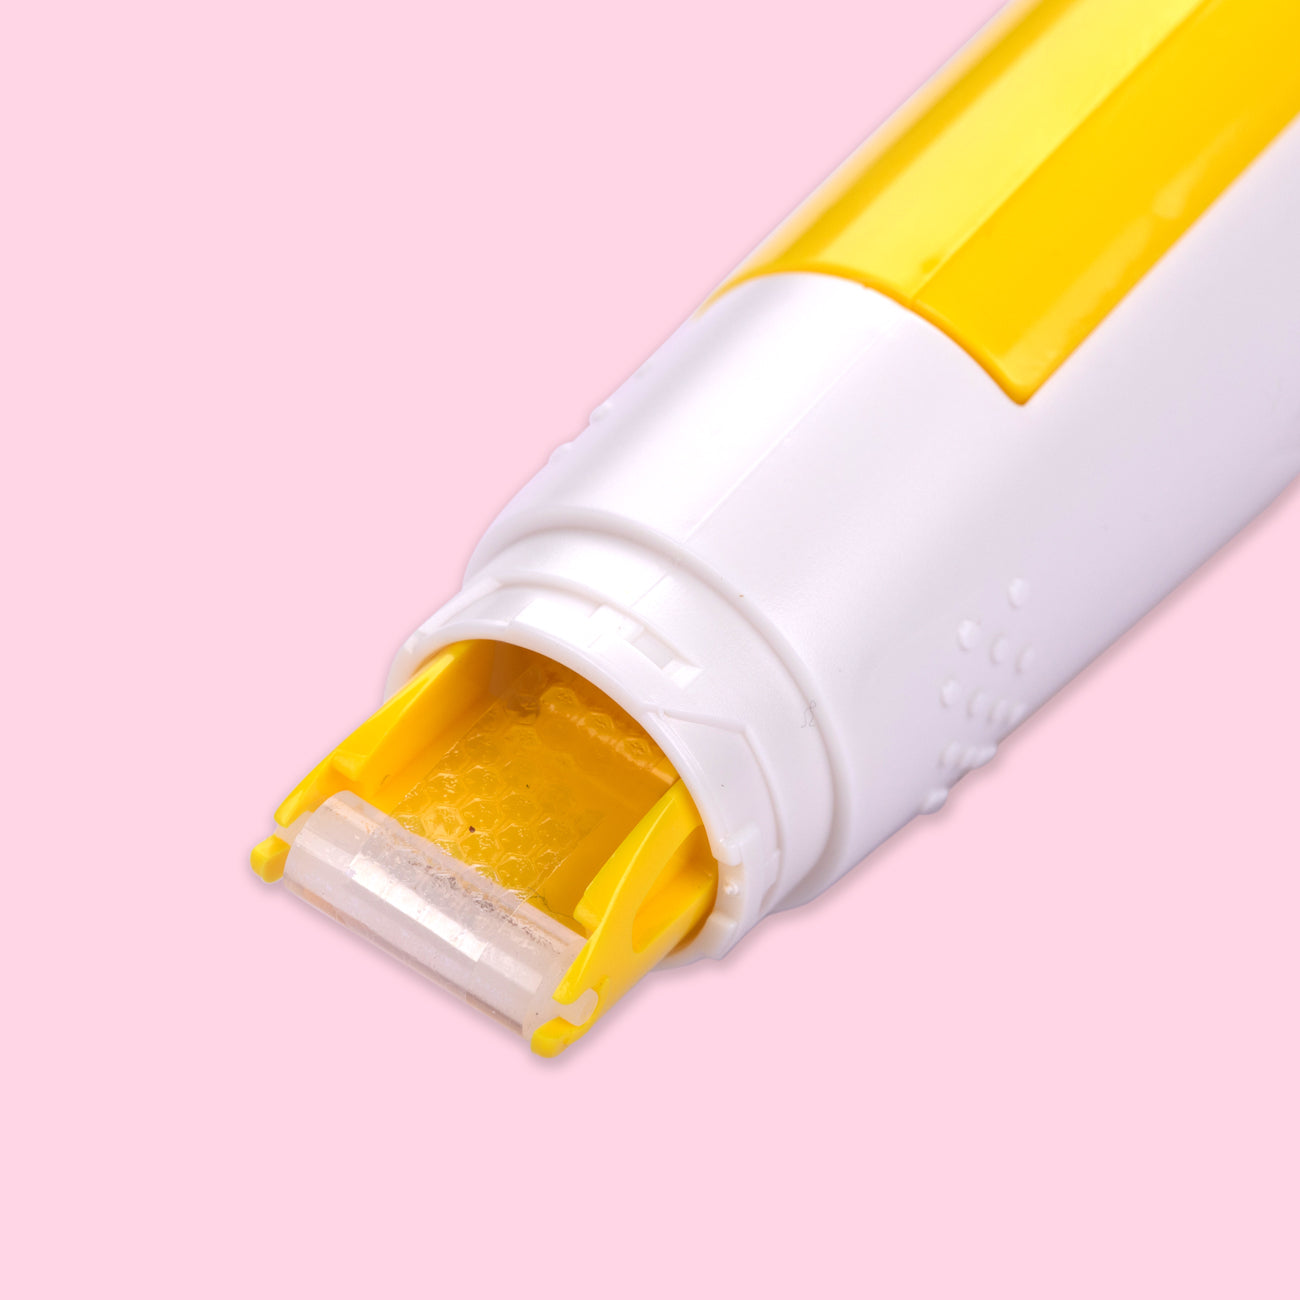 Plus Norino Limited Edition Glue Tape - Pikachu